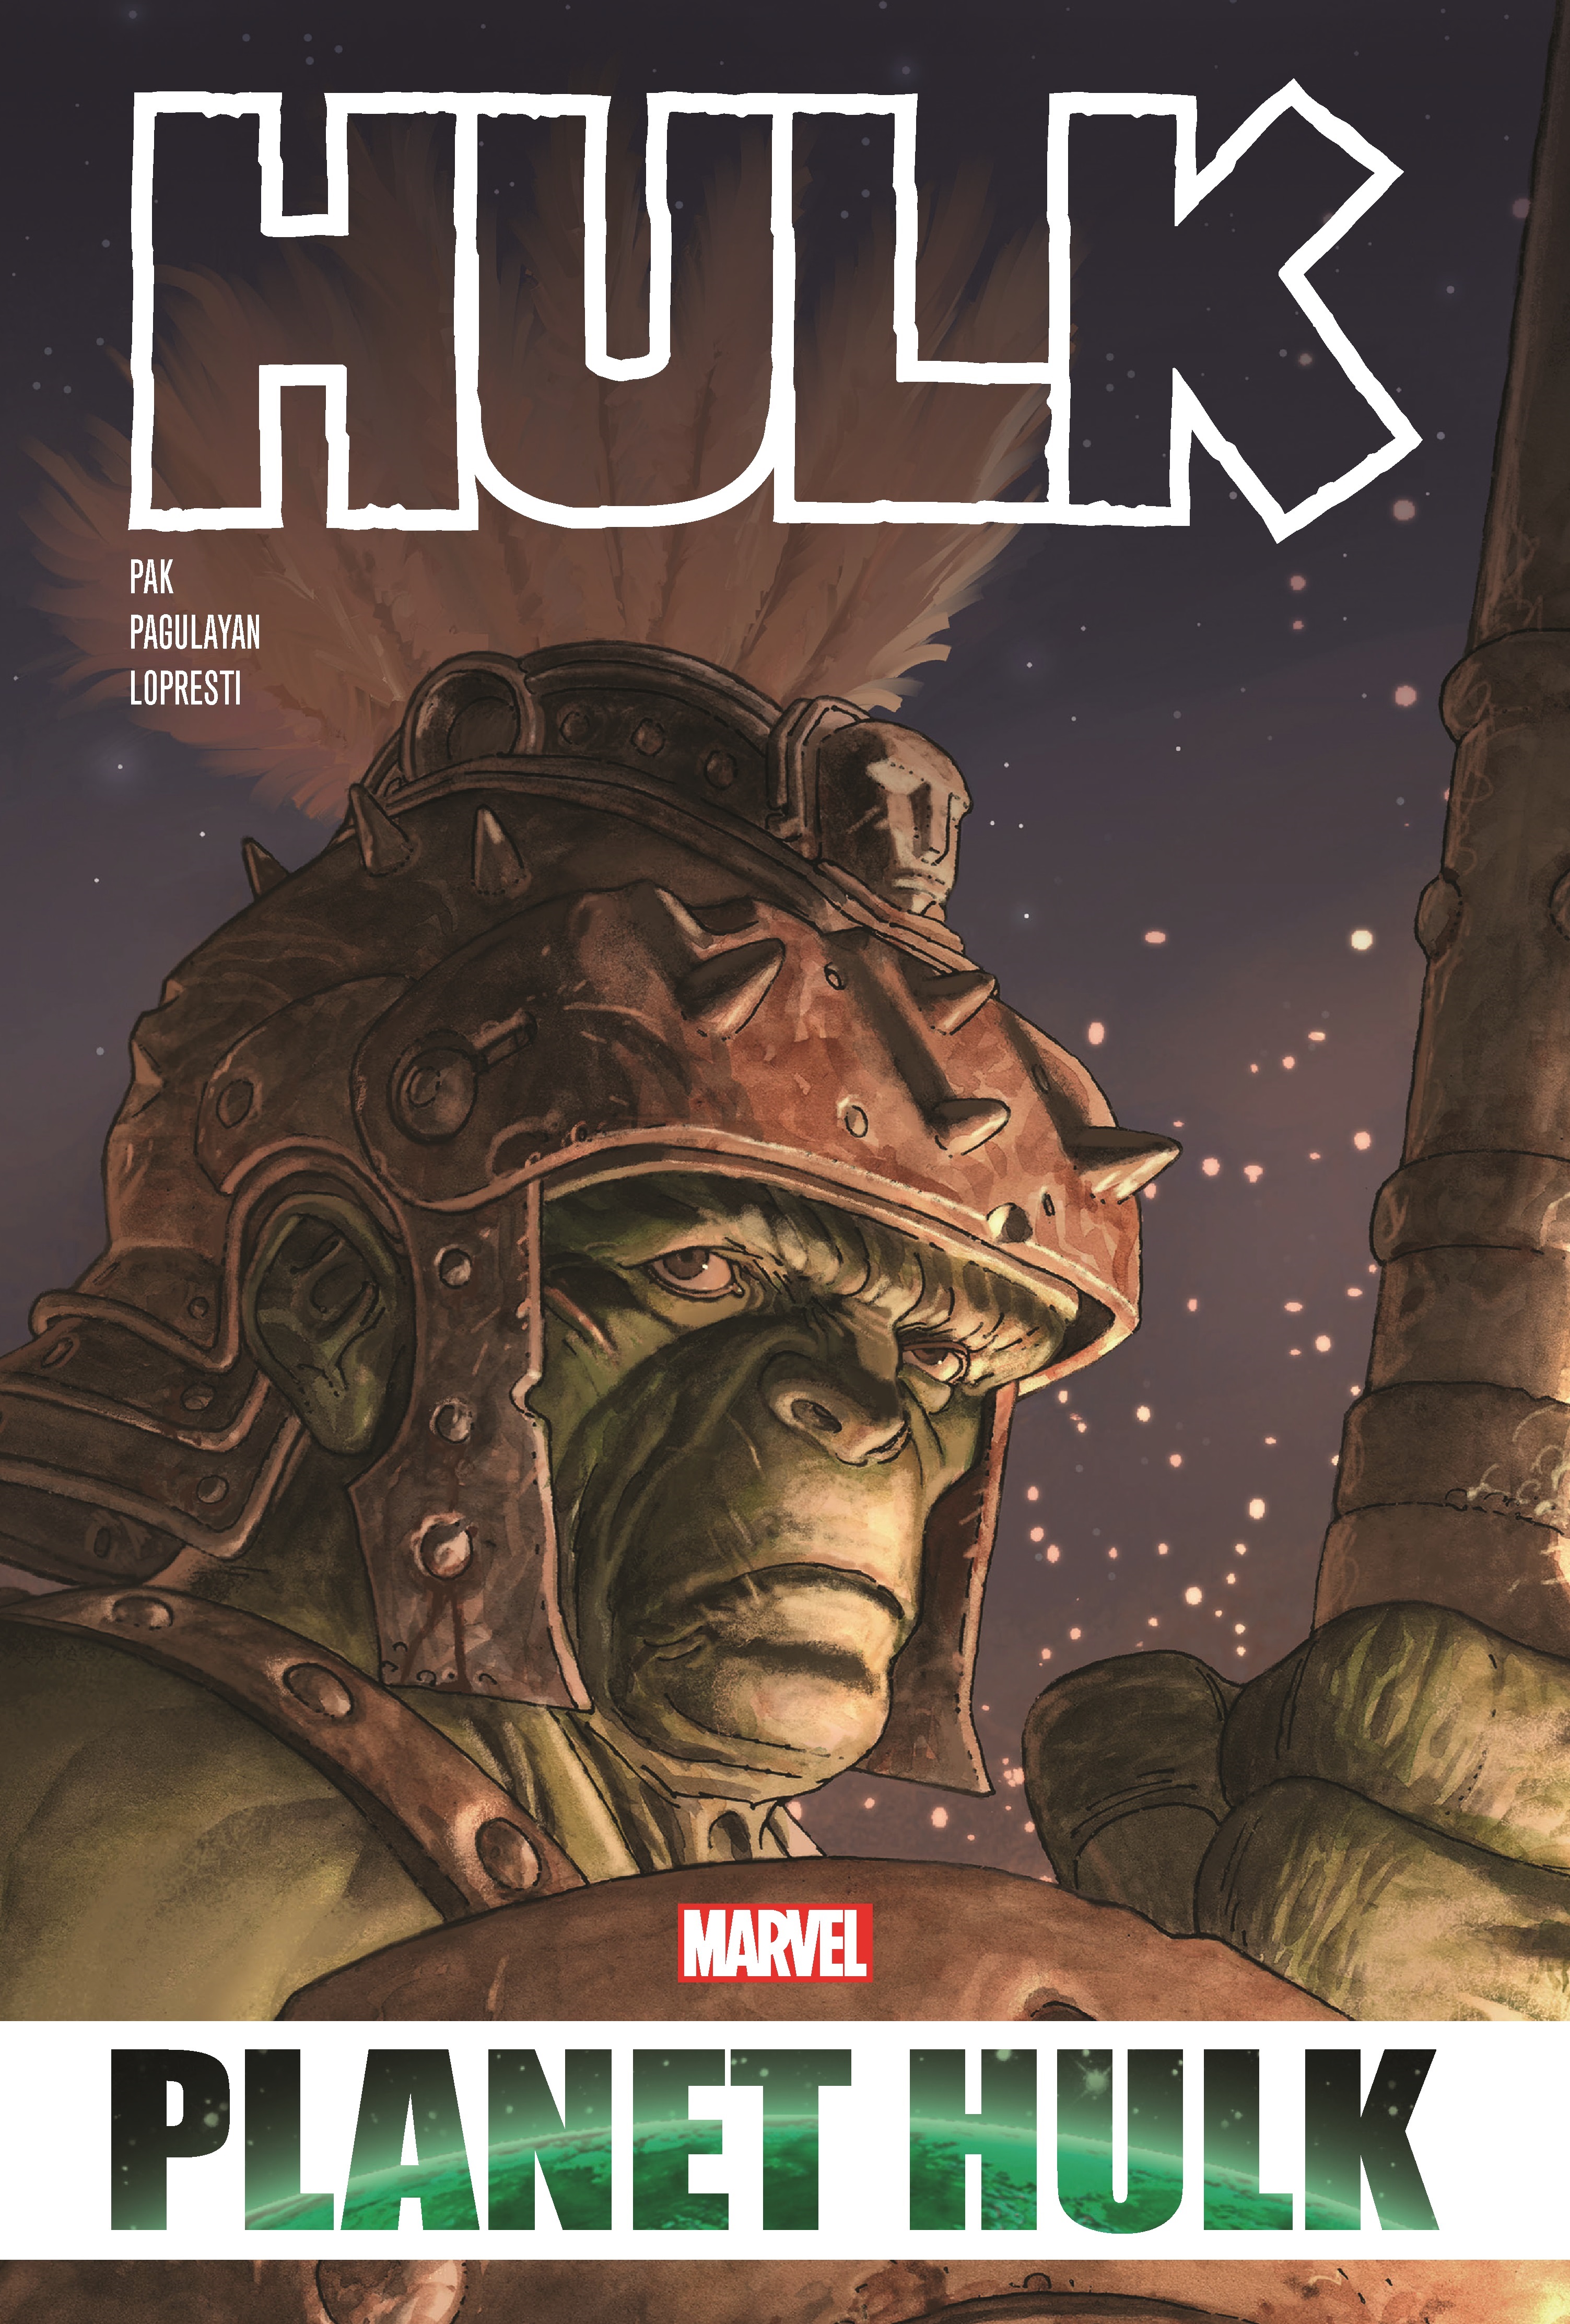 Hulk: Planet Hulk Omnibus (Hardcover)